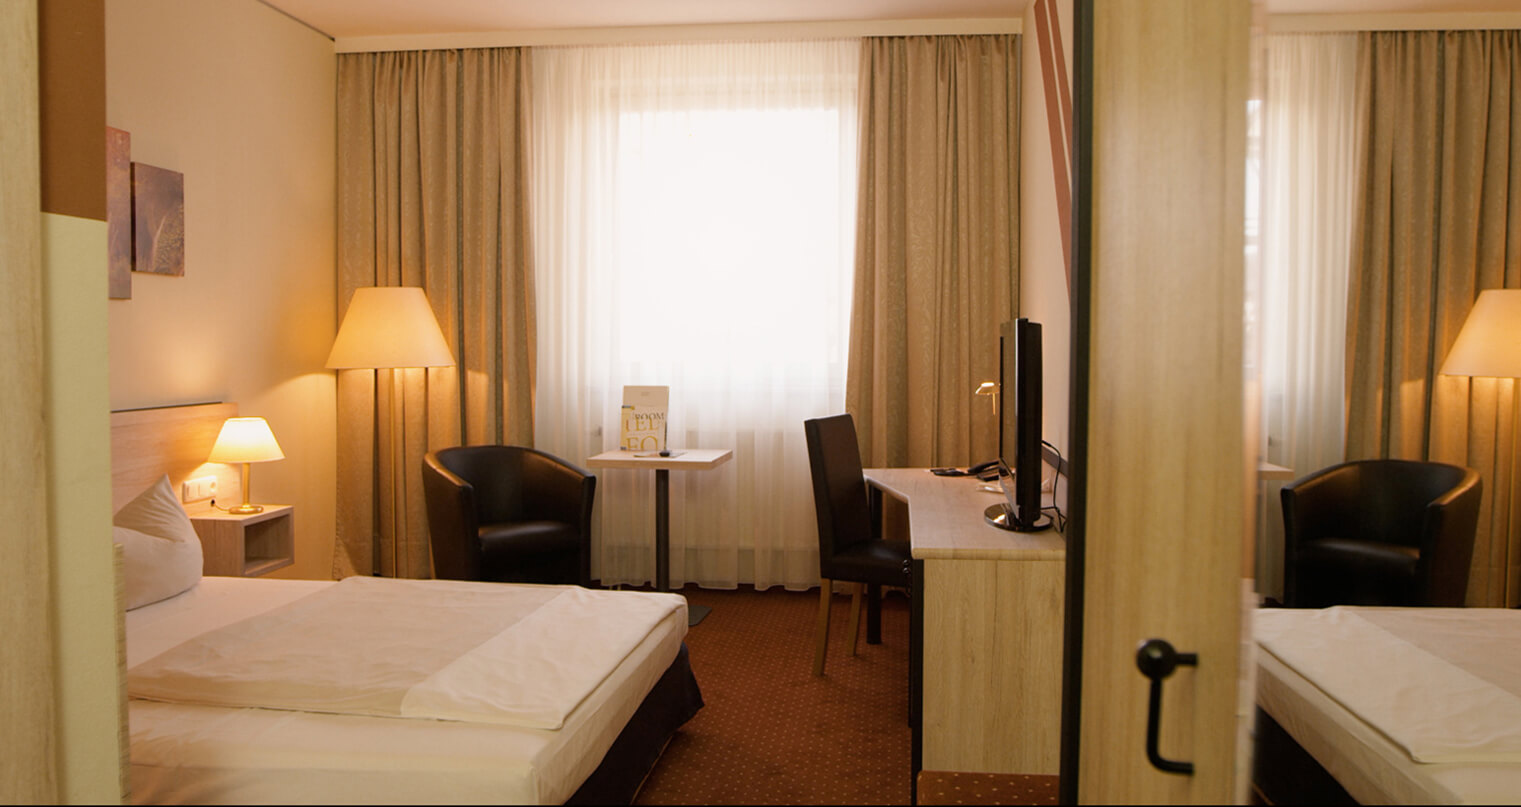 Komplette Hoteleinrichtung im Zimmer bekleben Novina Hotel Südwestpark Nürnberg W945 nachher